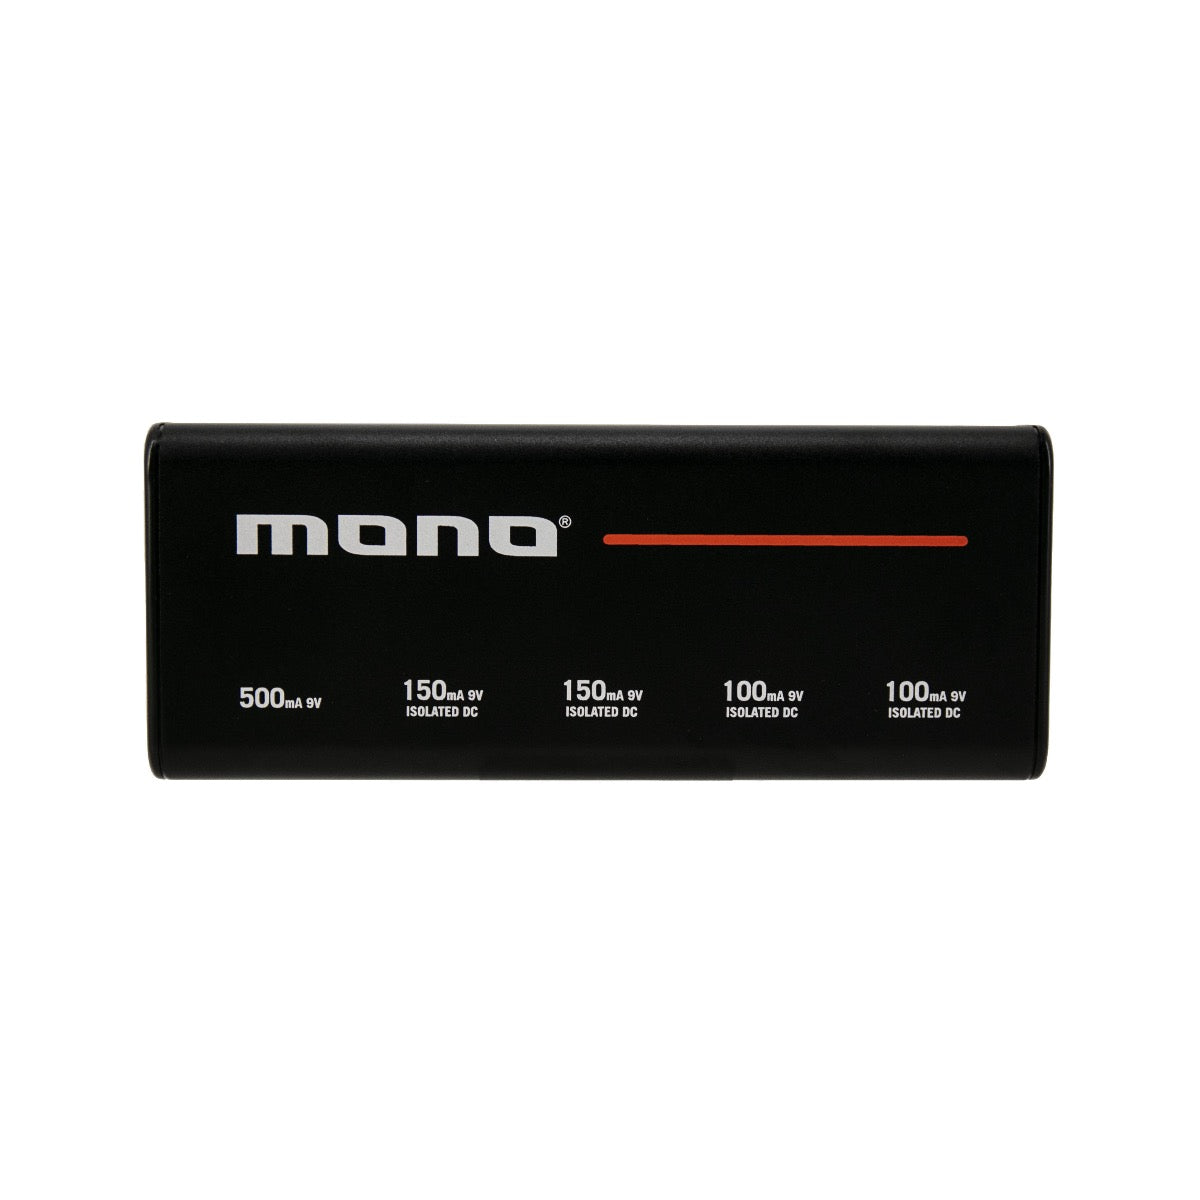 Mono Power Supply Small, View 2